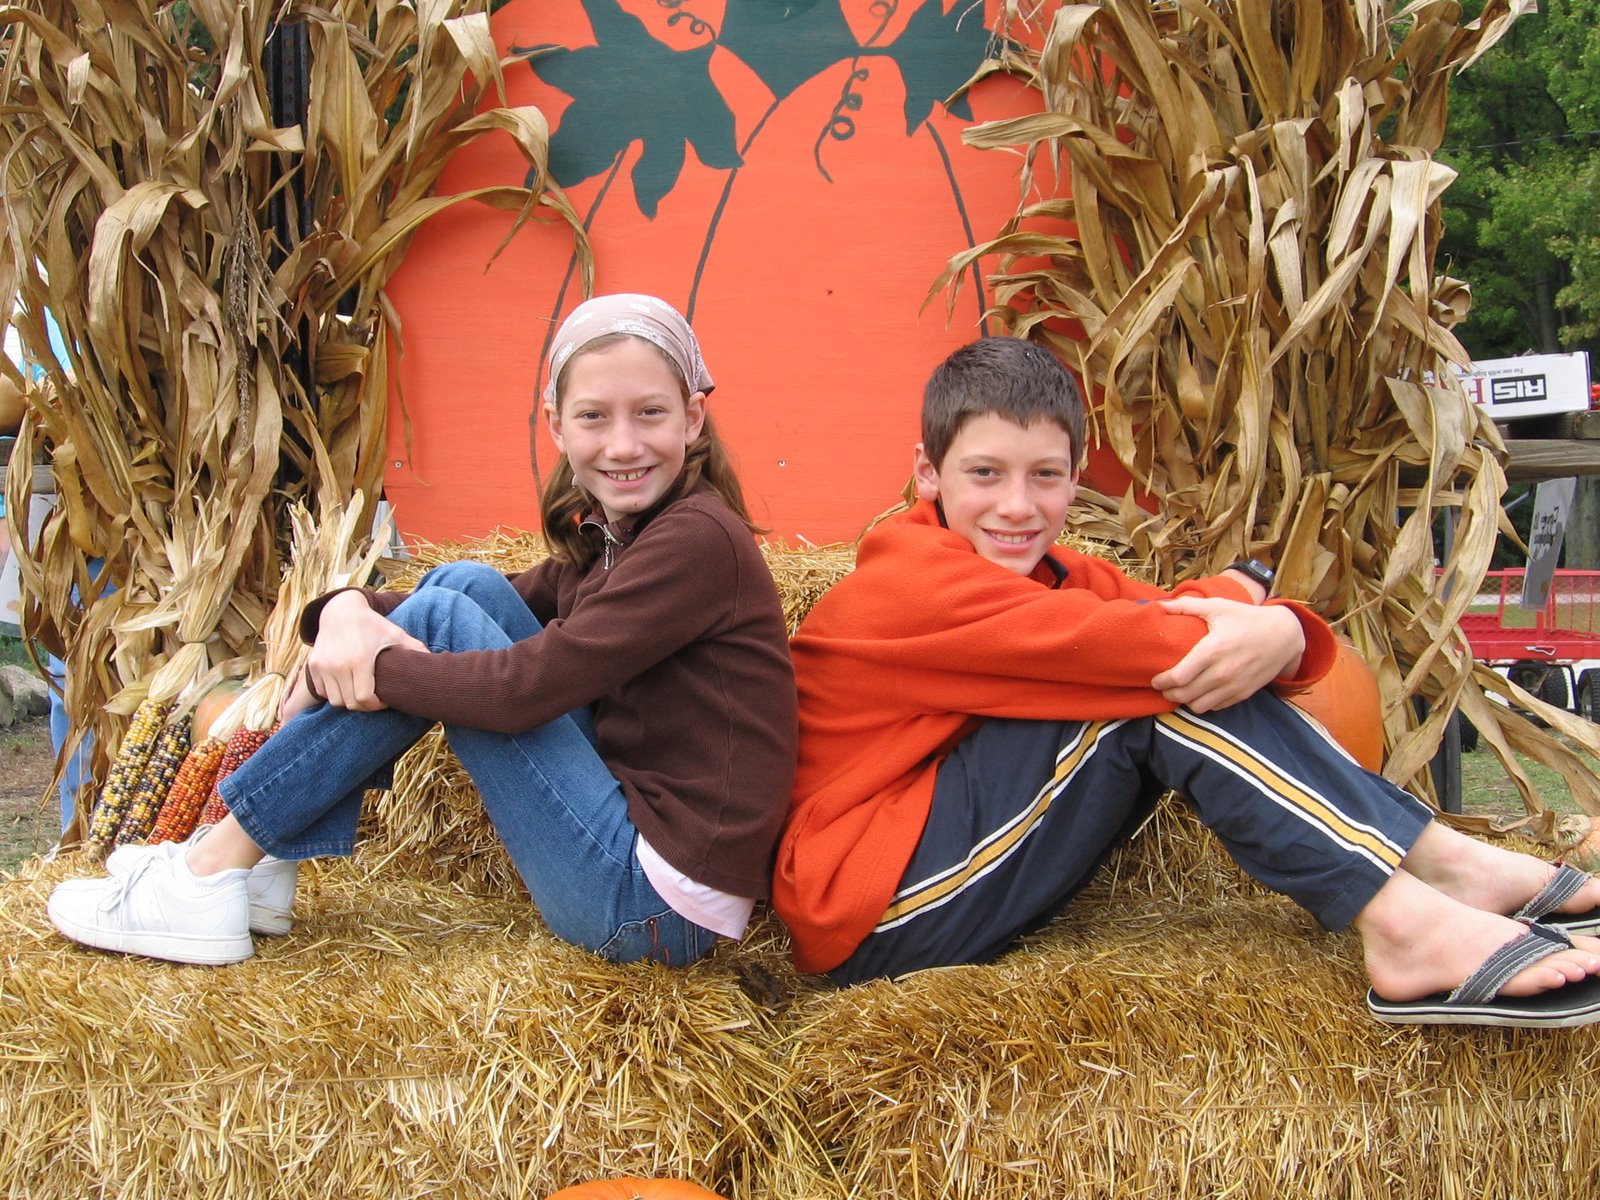 [Rachel+&+Jacob+and+the+pumpkin.jpg]